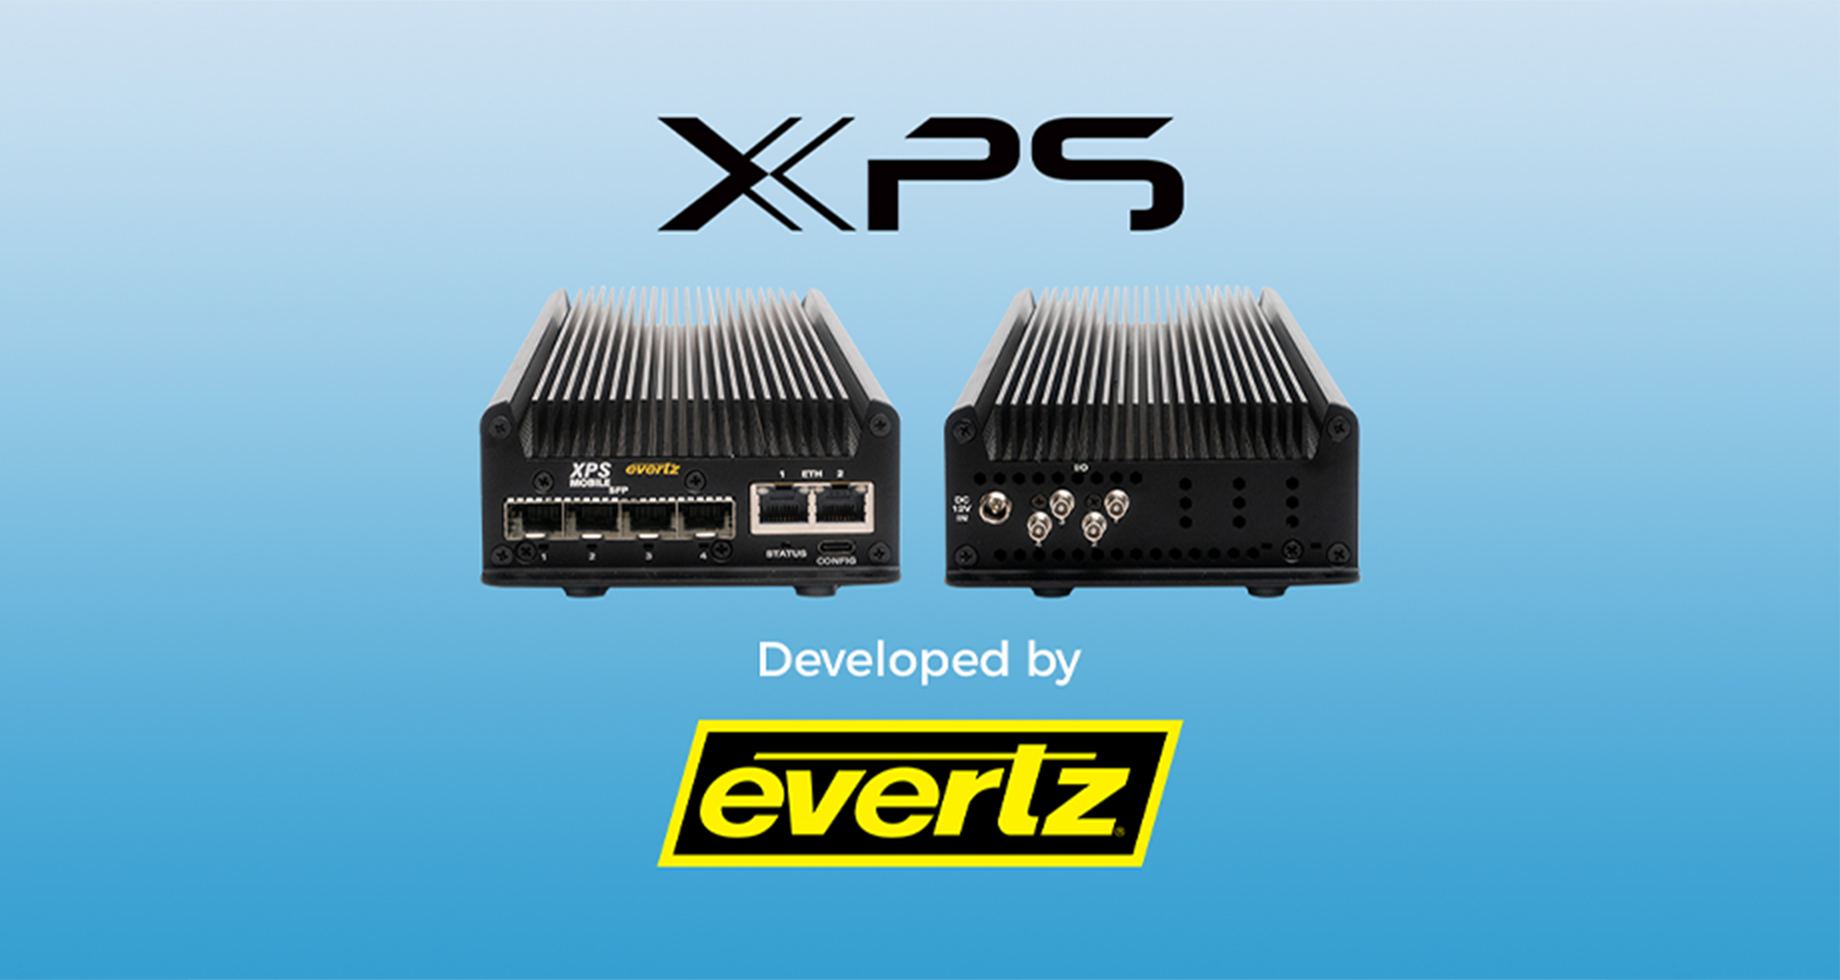 Evertz' XPS Series Real-Time 4K/UHD/3G/HD Streaming Platform